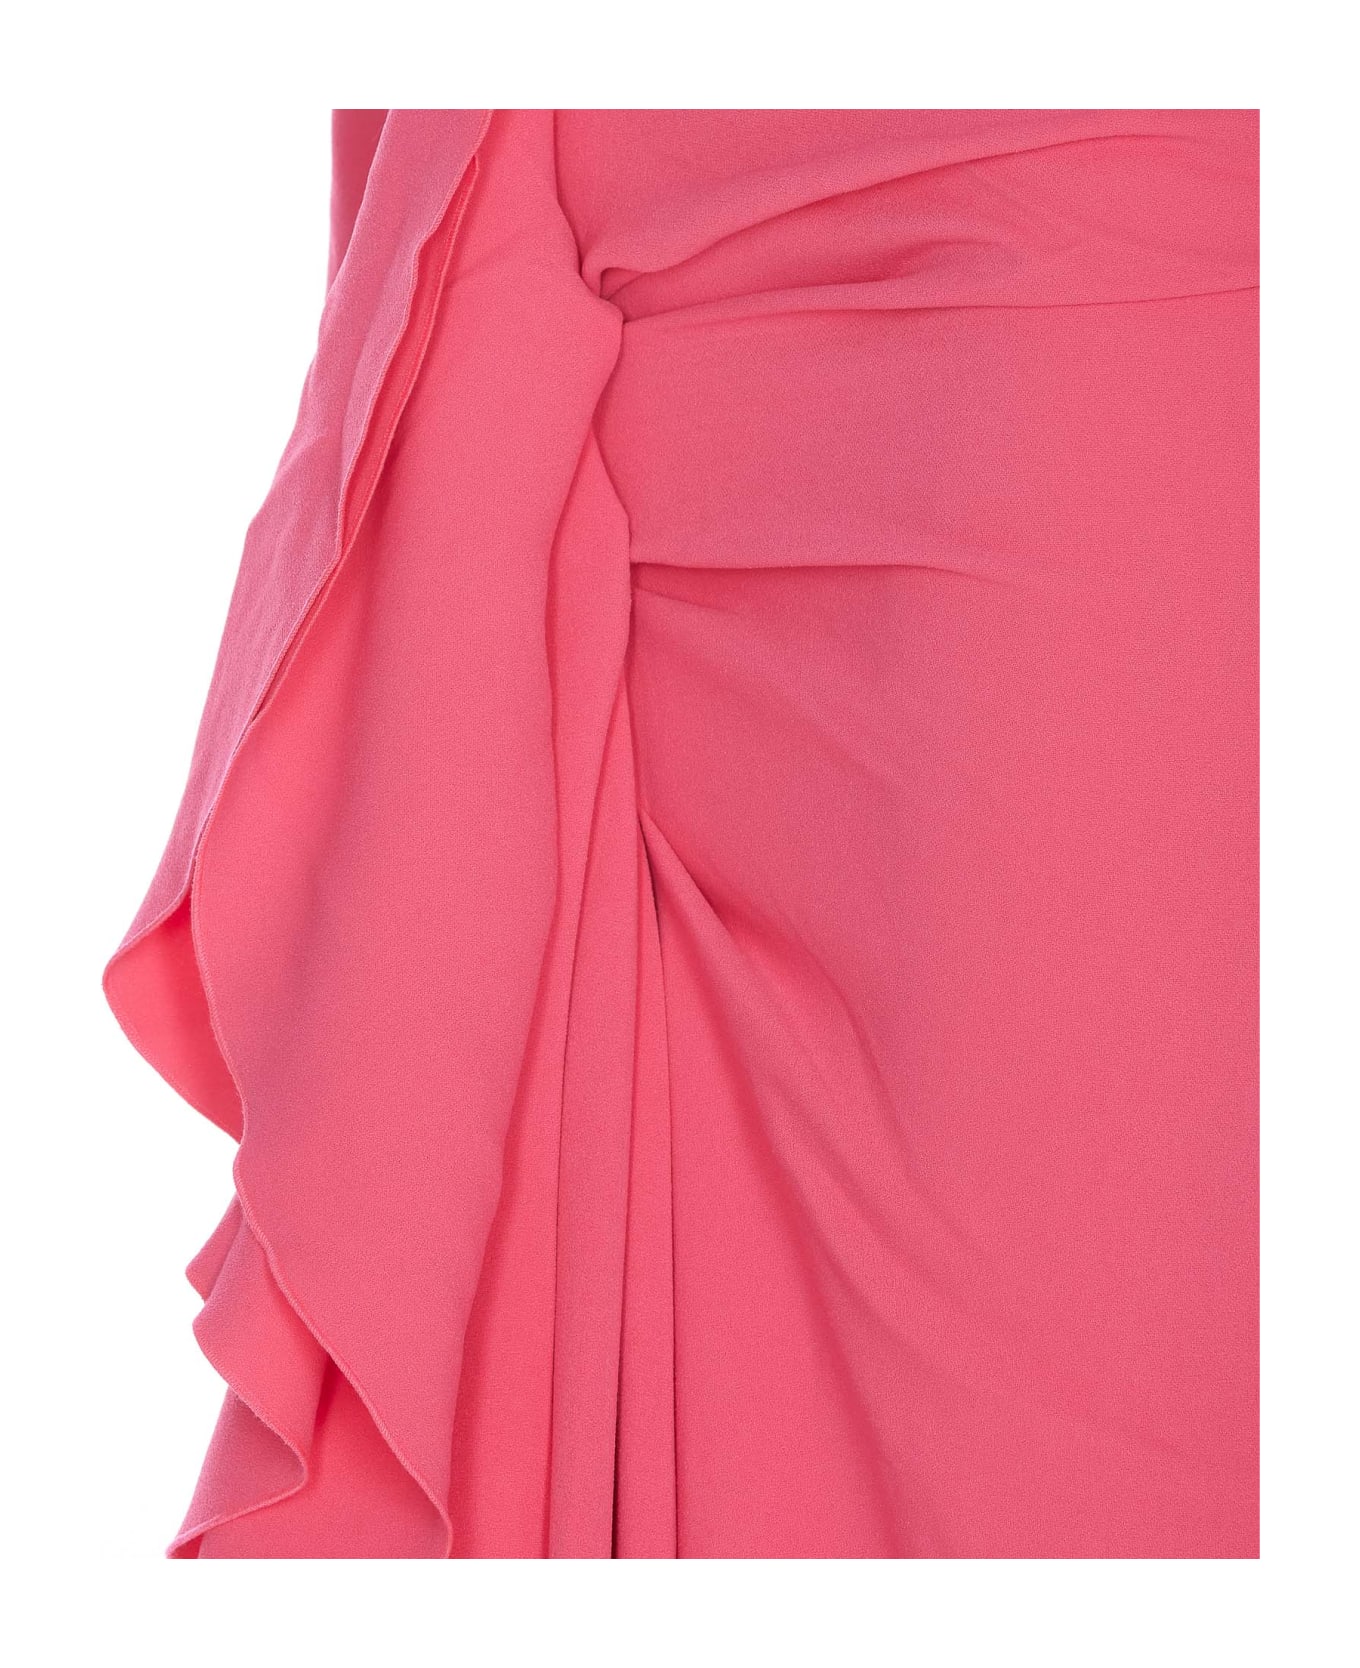 Solace London Nia Maxi Dress - Pink